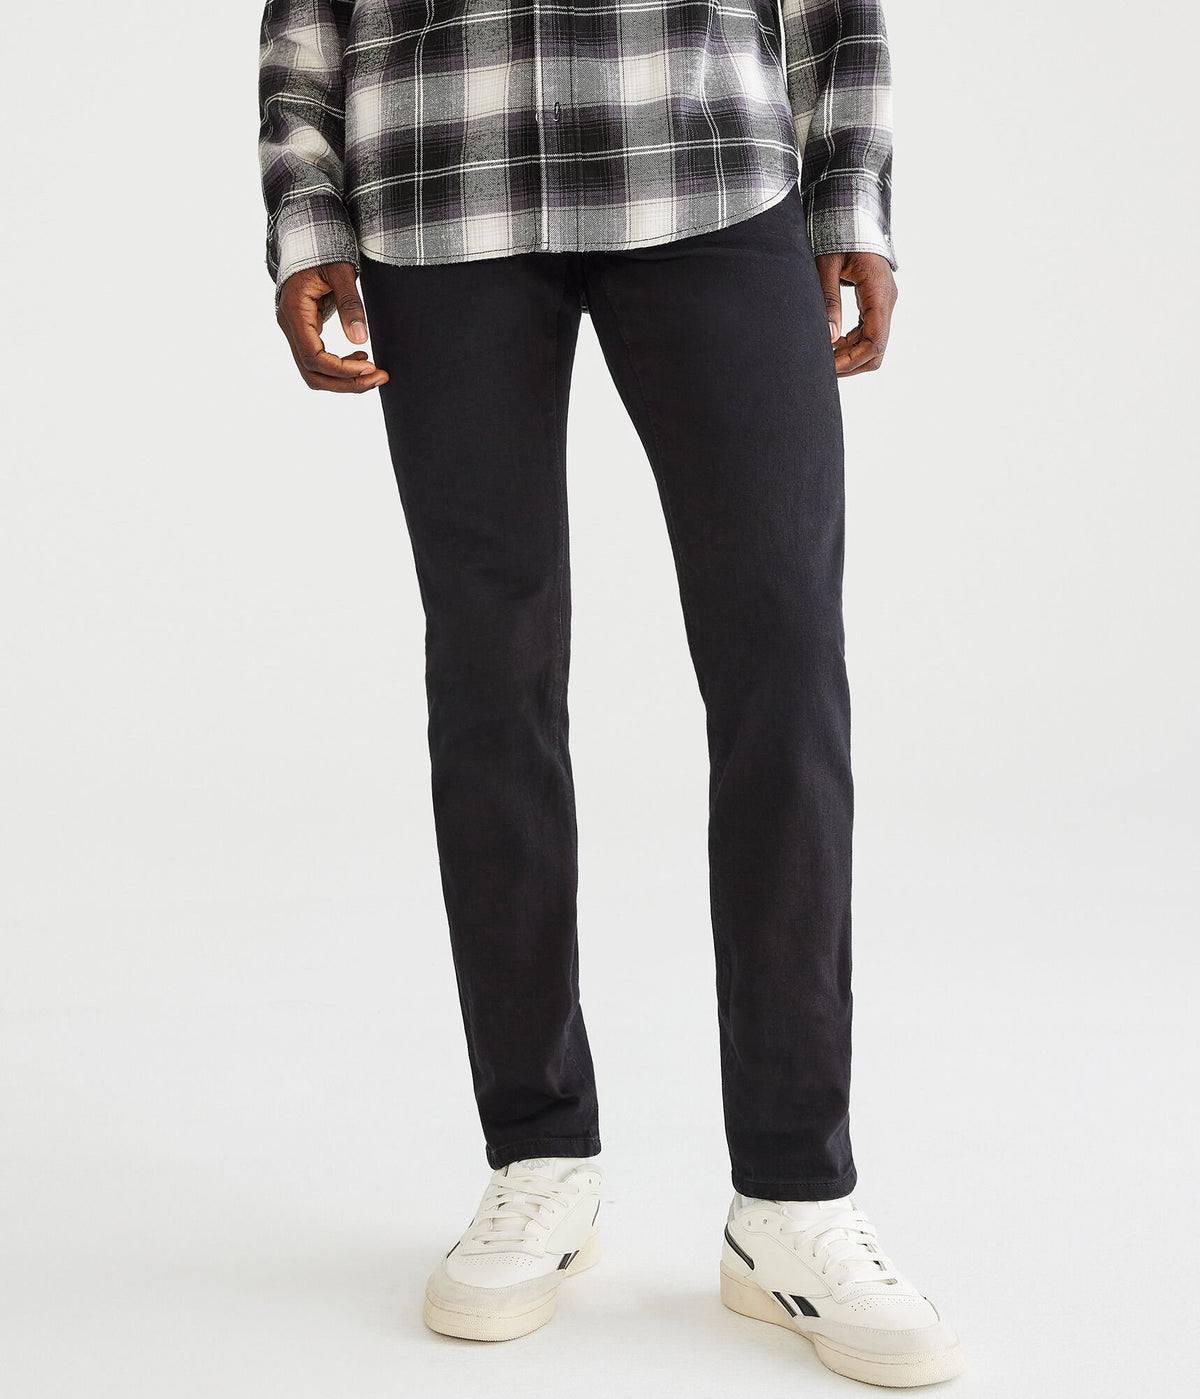 Aeropostale Mens' Skinny Premium Air Jean -  - Size 31X30 - Cotton - Teen Fashion & Clothing Black